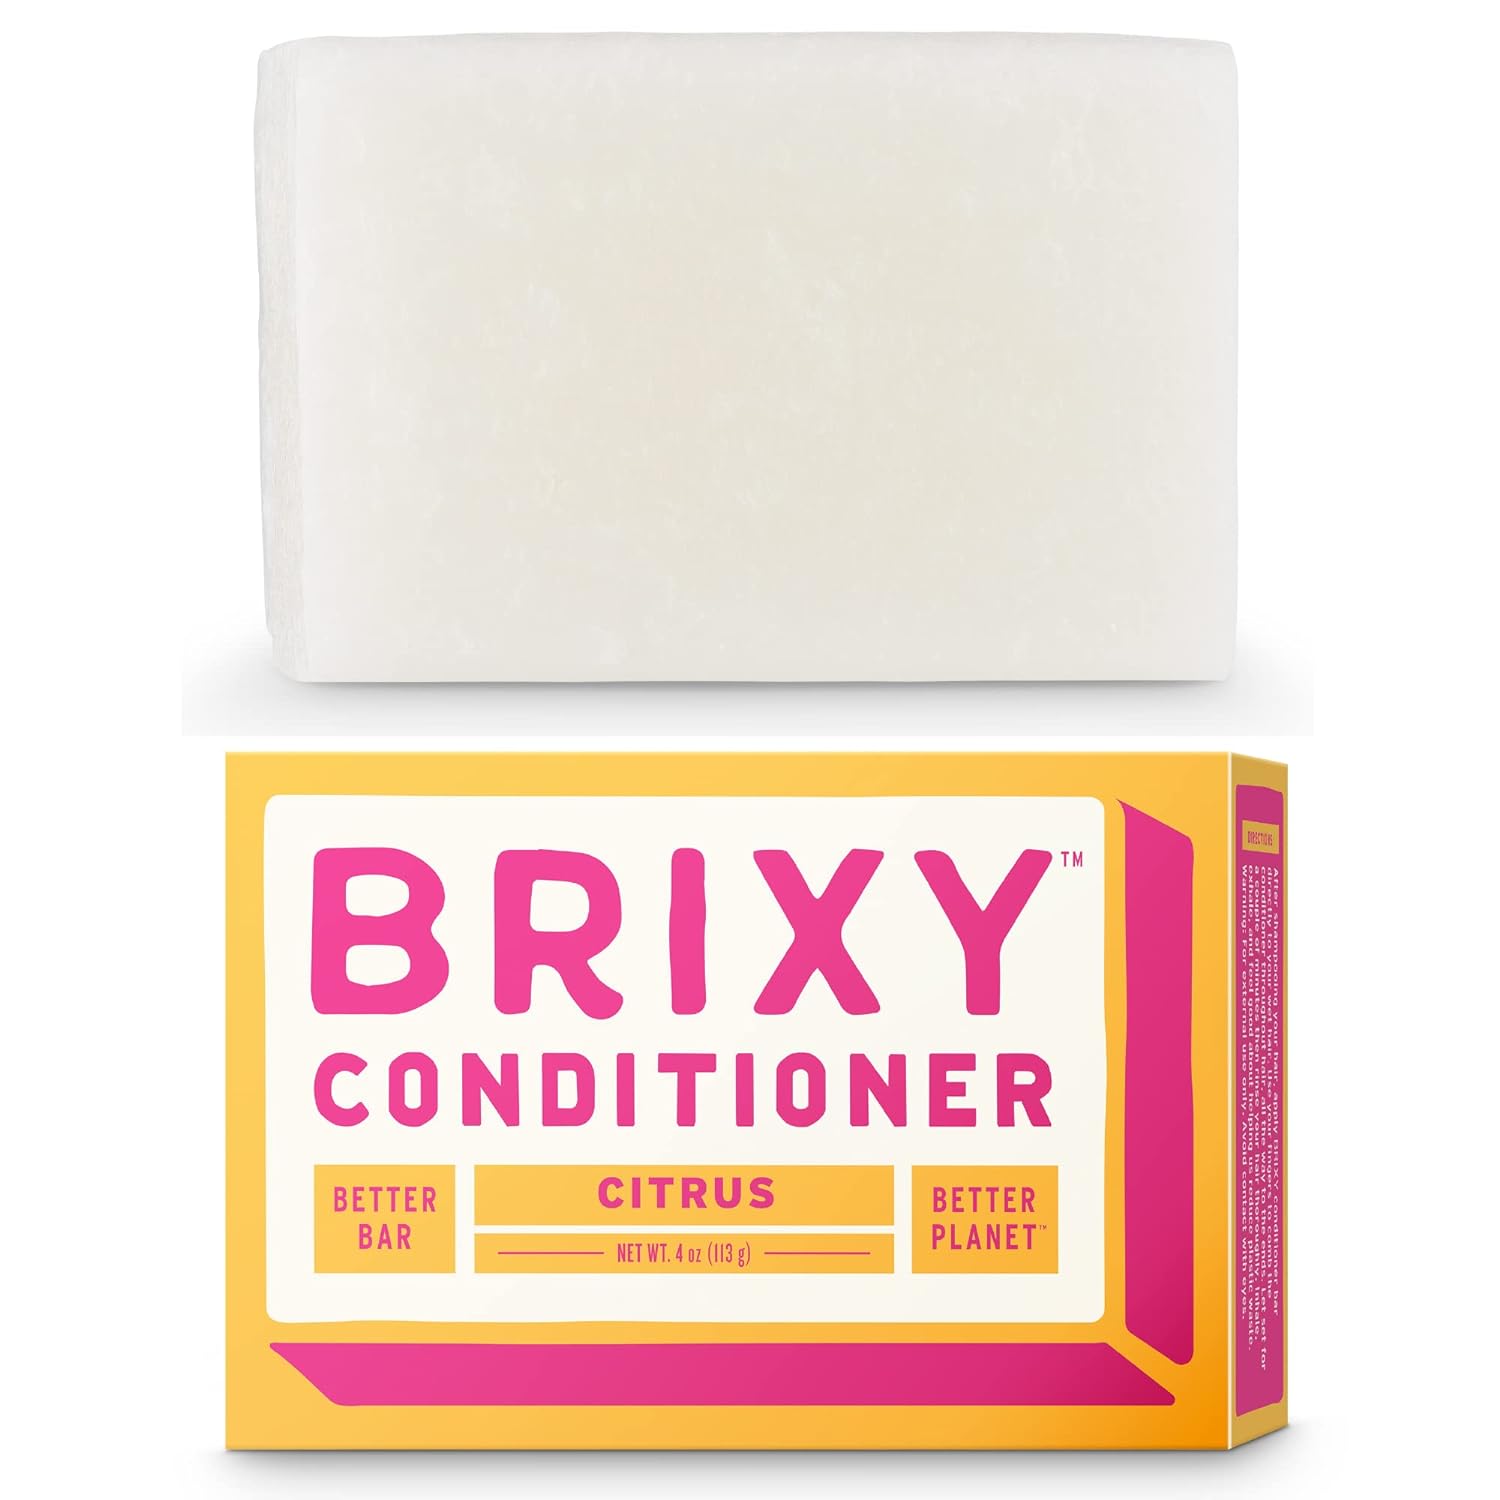 Brixy Conditioner Bar Citrus / 4Oz